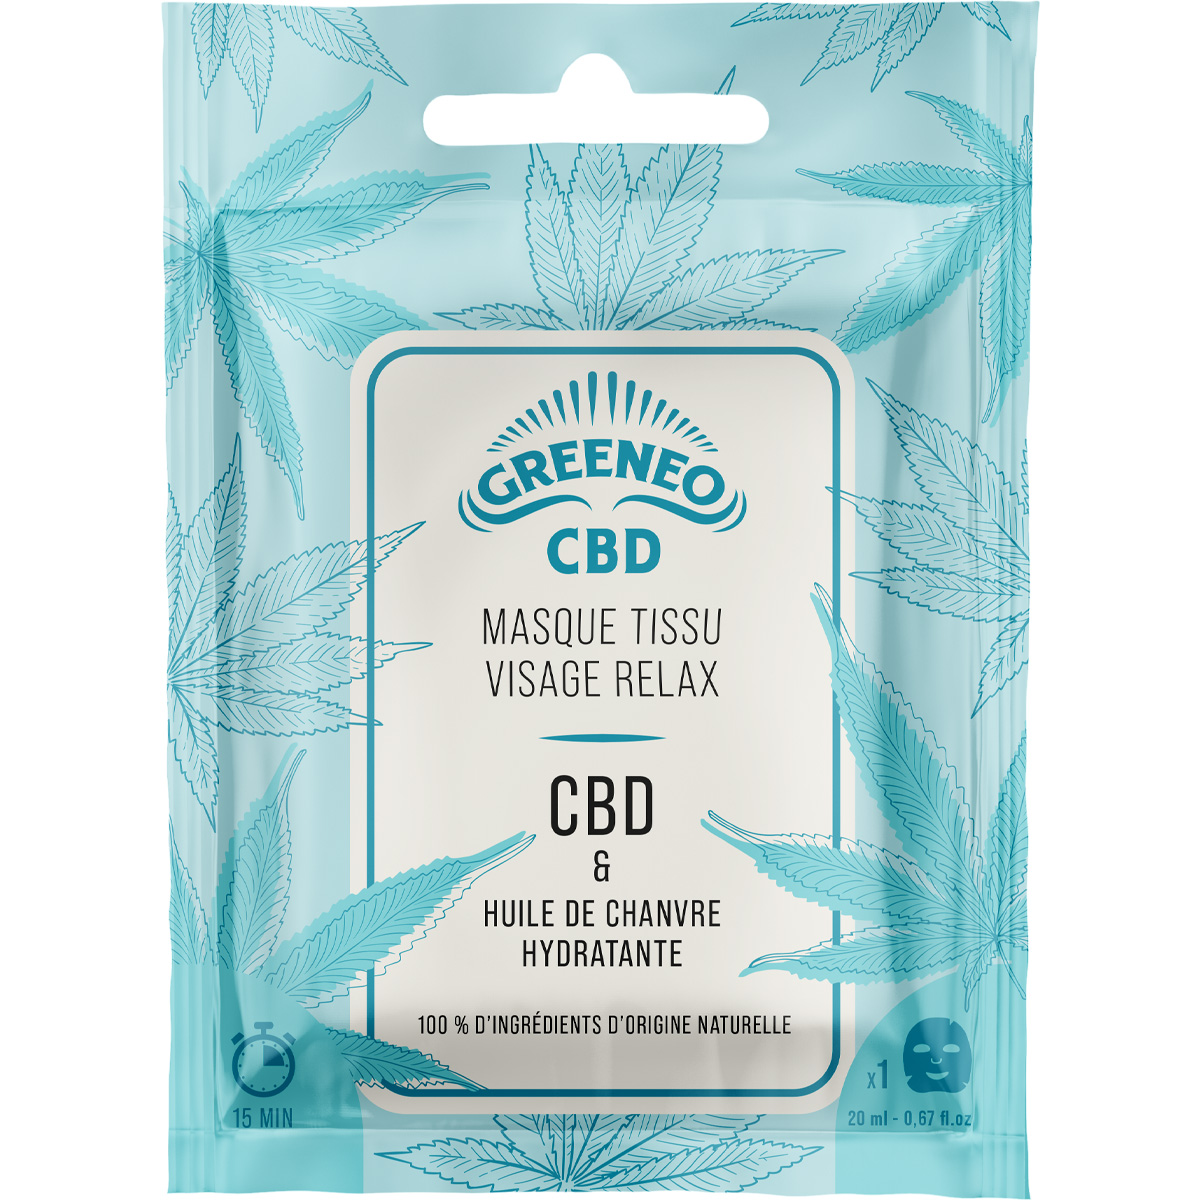 Masque en tissu hydratant au CBD - Relax - Visage - 20 ml